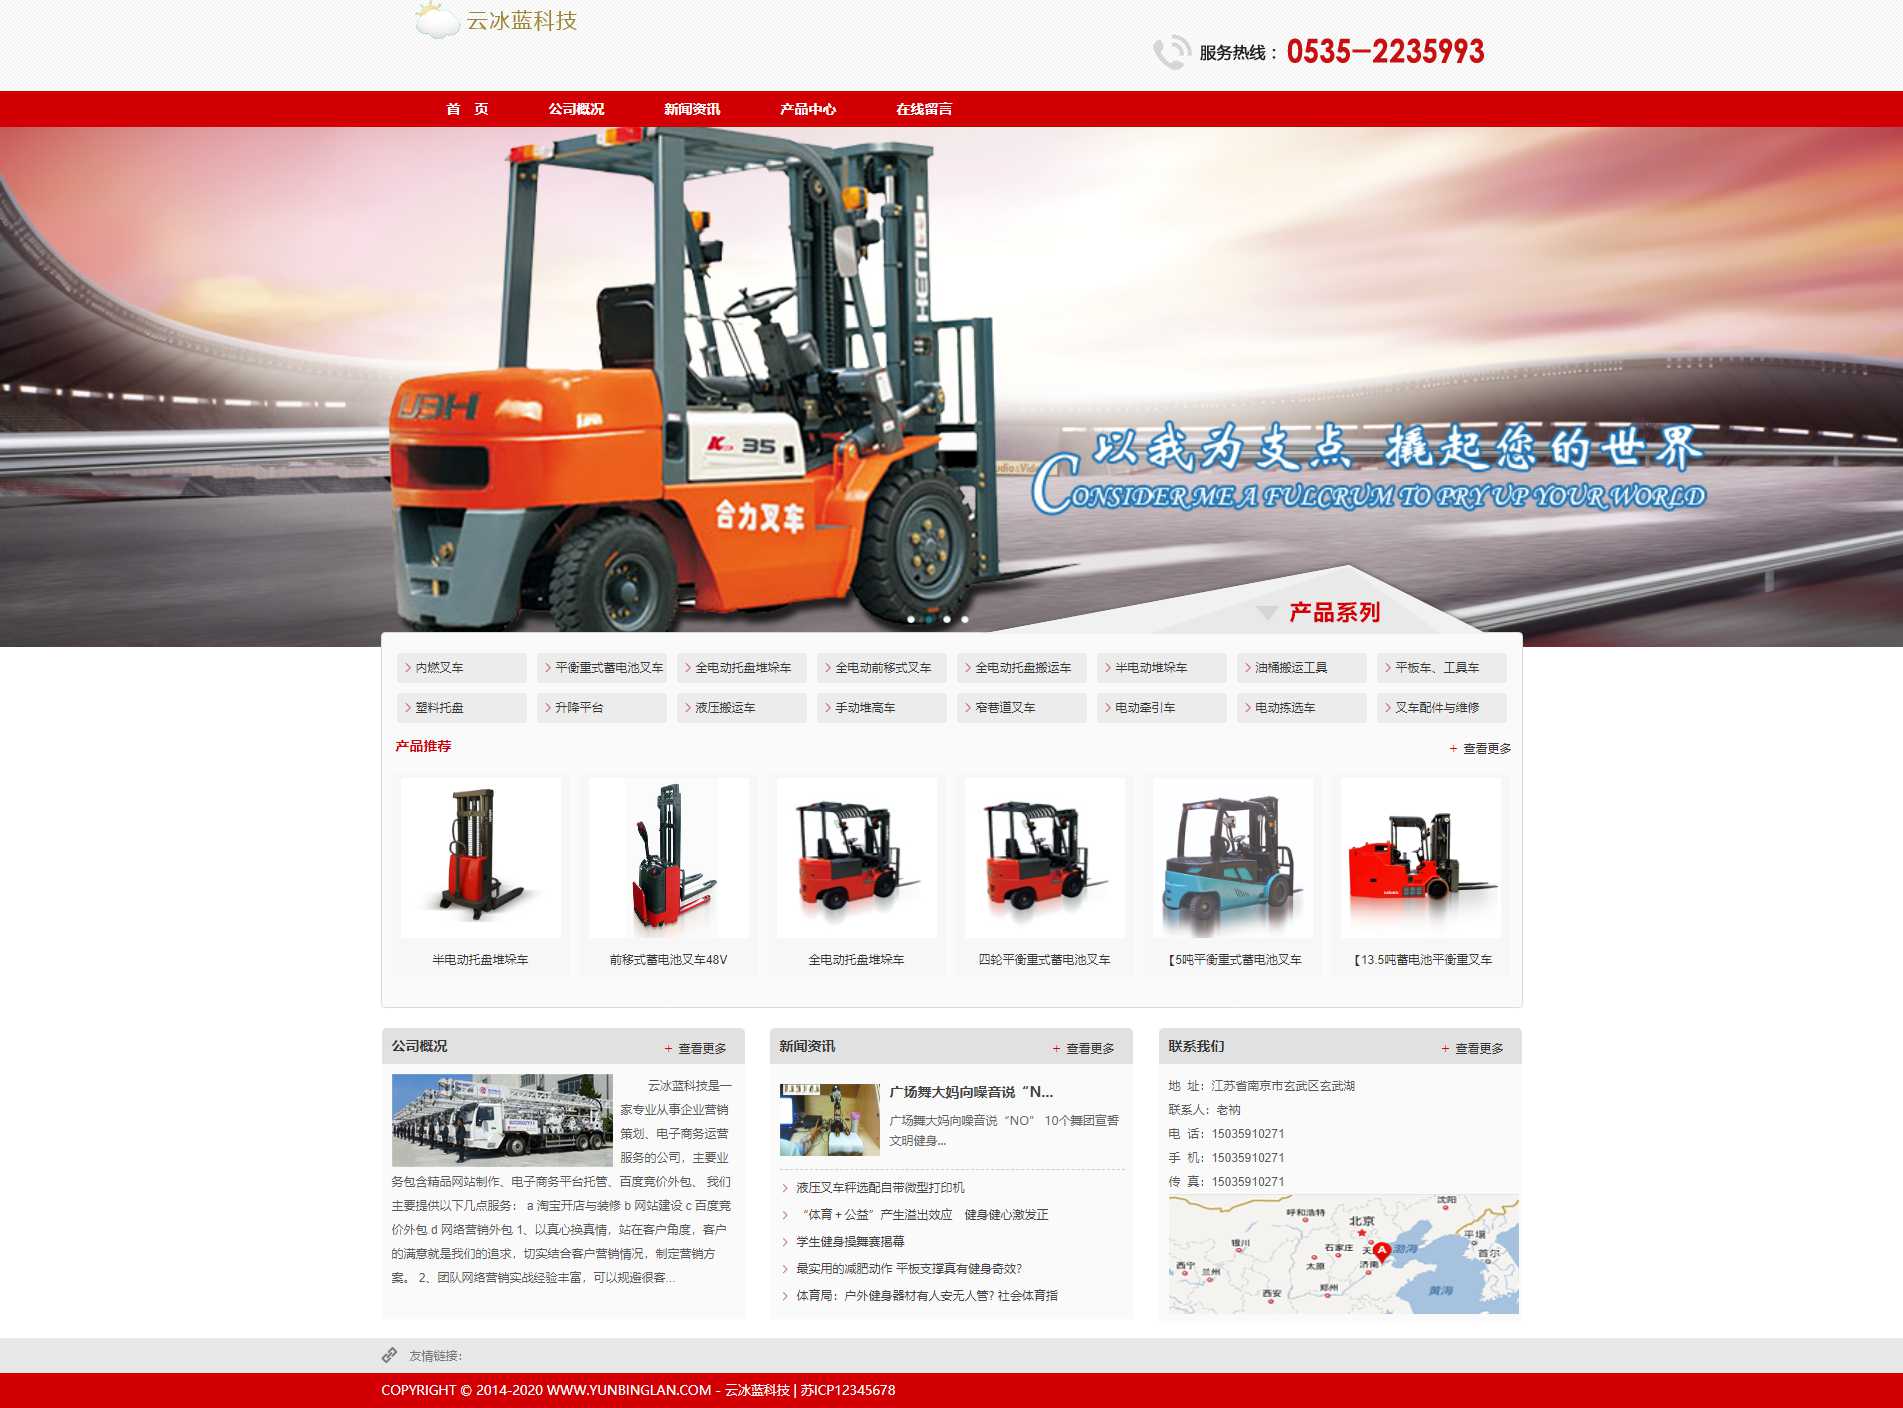 zs68红色机械设备叉车产品网站 - 云冰蓝科技(图1)